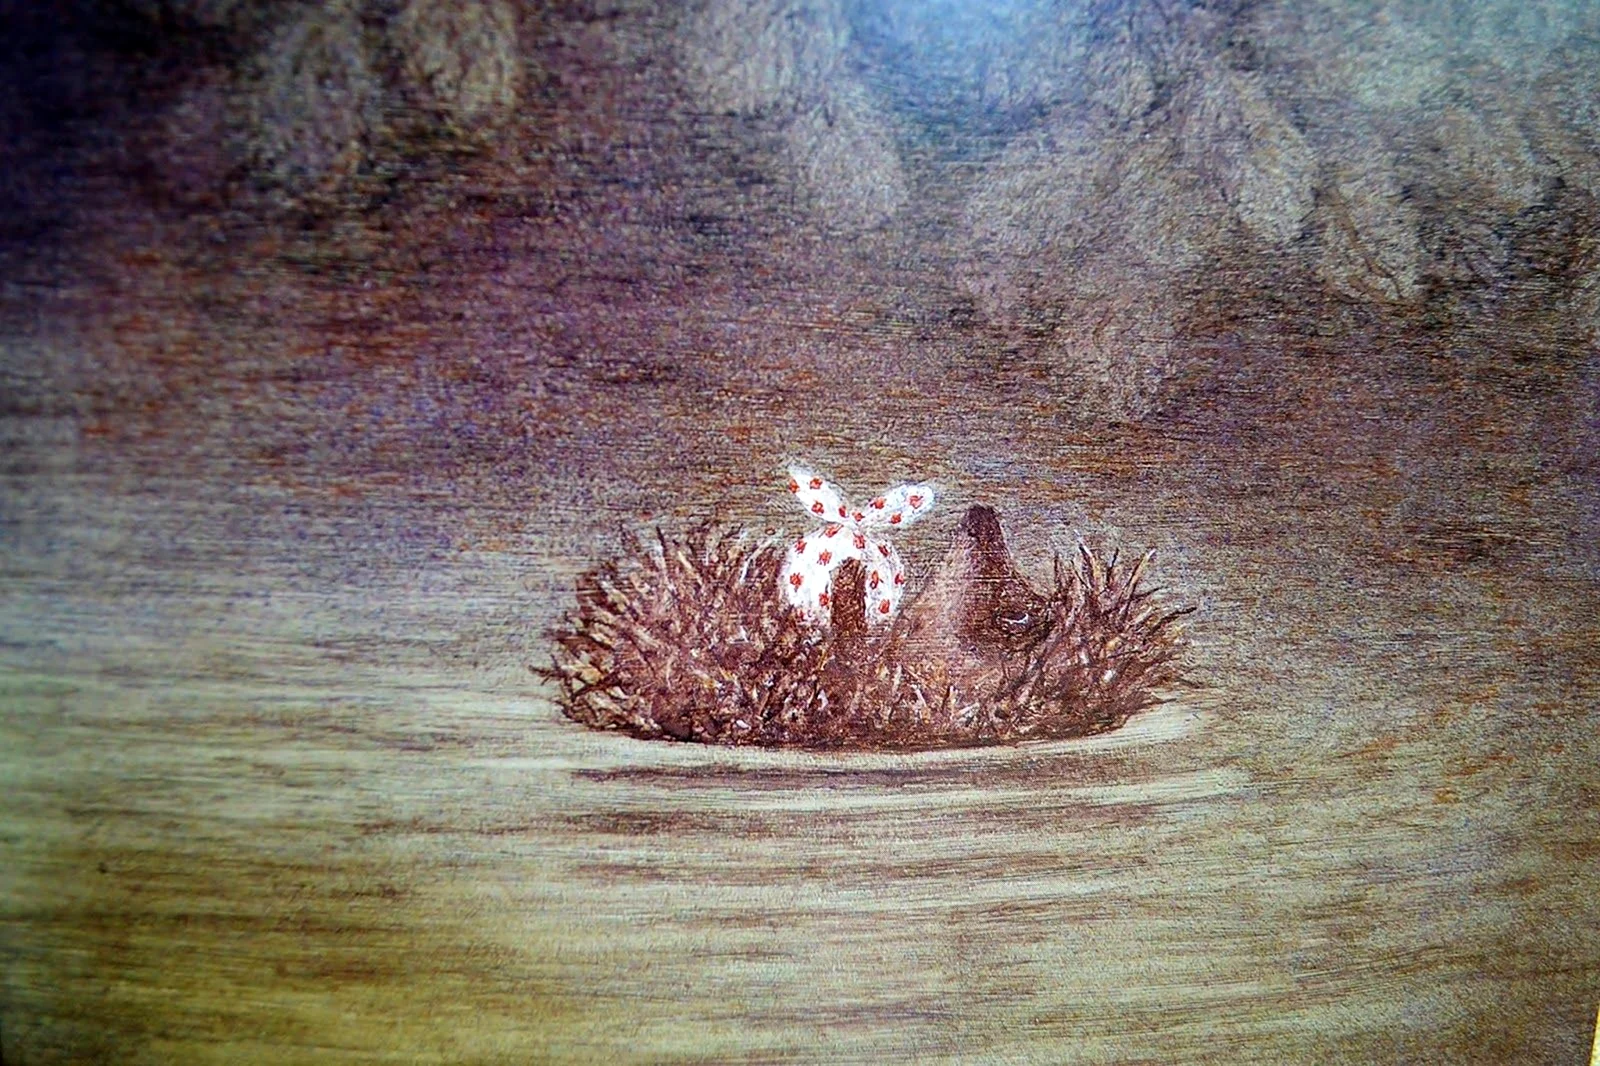 Ёжик в тумане кадры из мультфильма